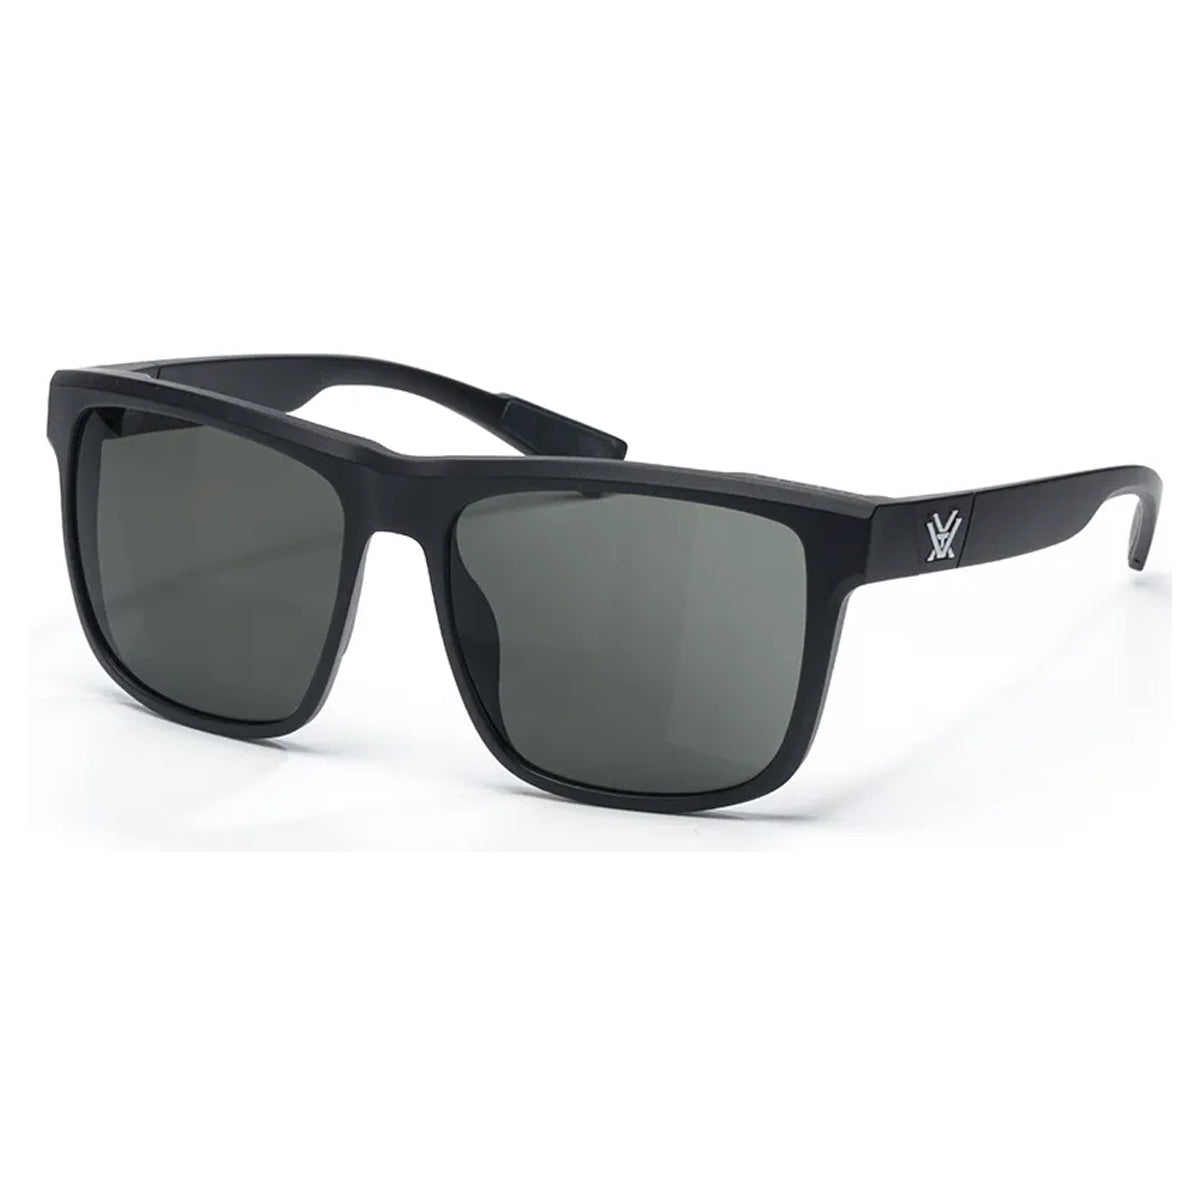 Vortex Men's Banshee Sunglasses in Black & Smoke by GOHUNT | Vortex Optics - GOHUNT Shop